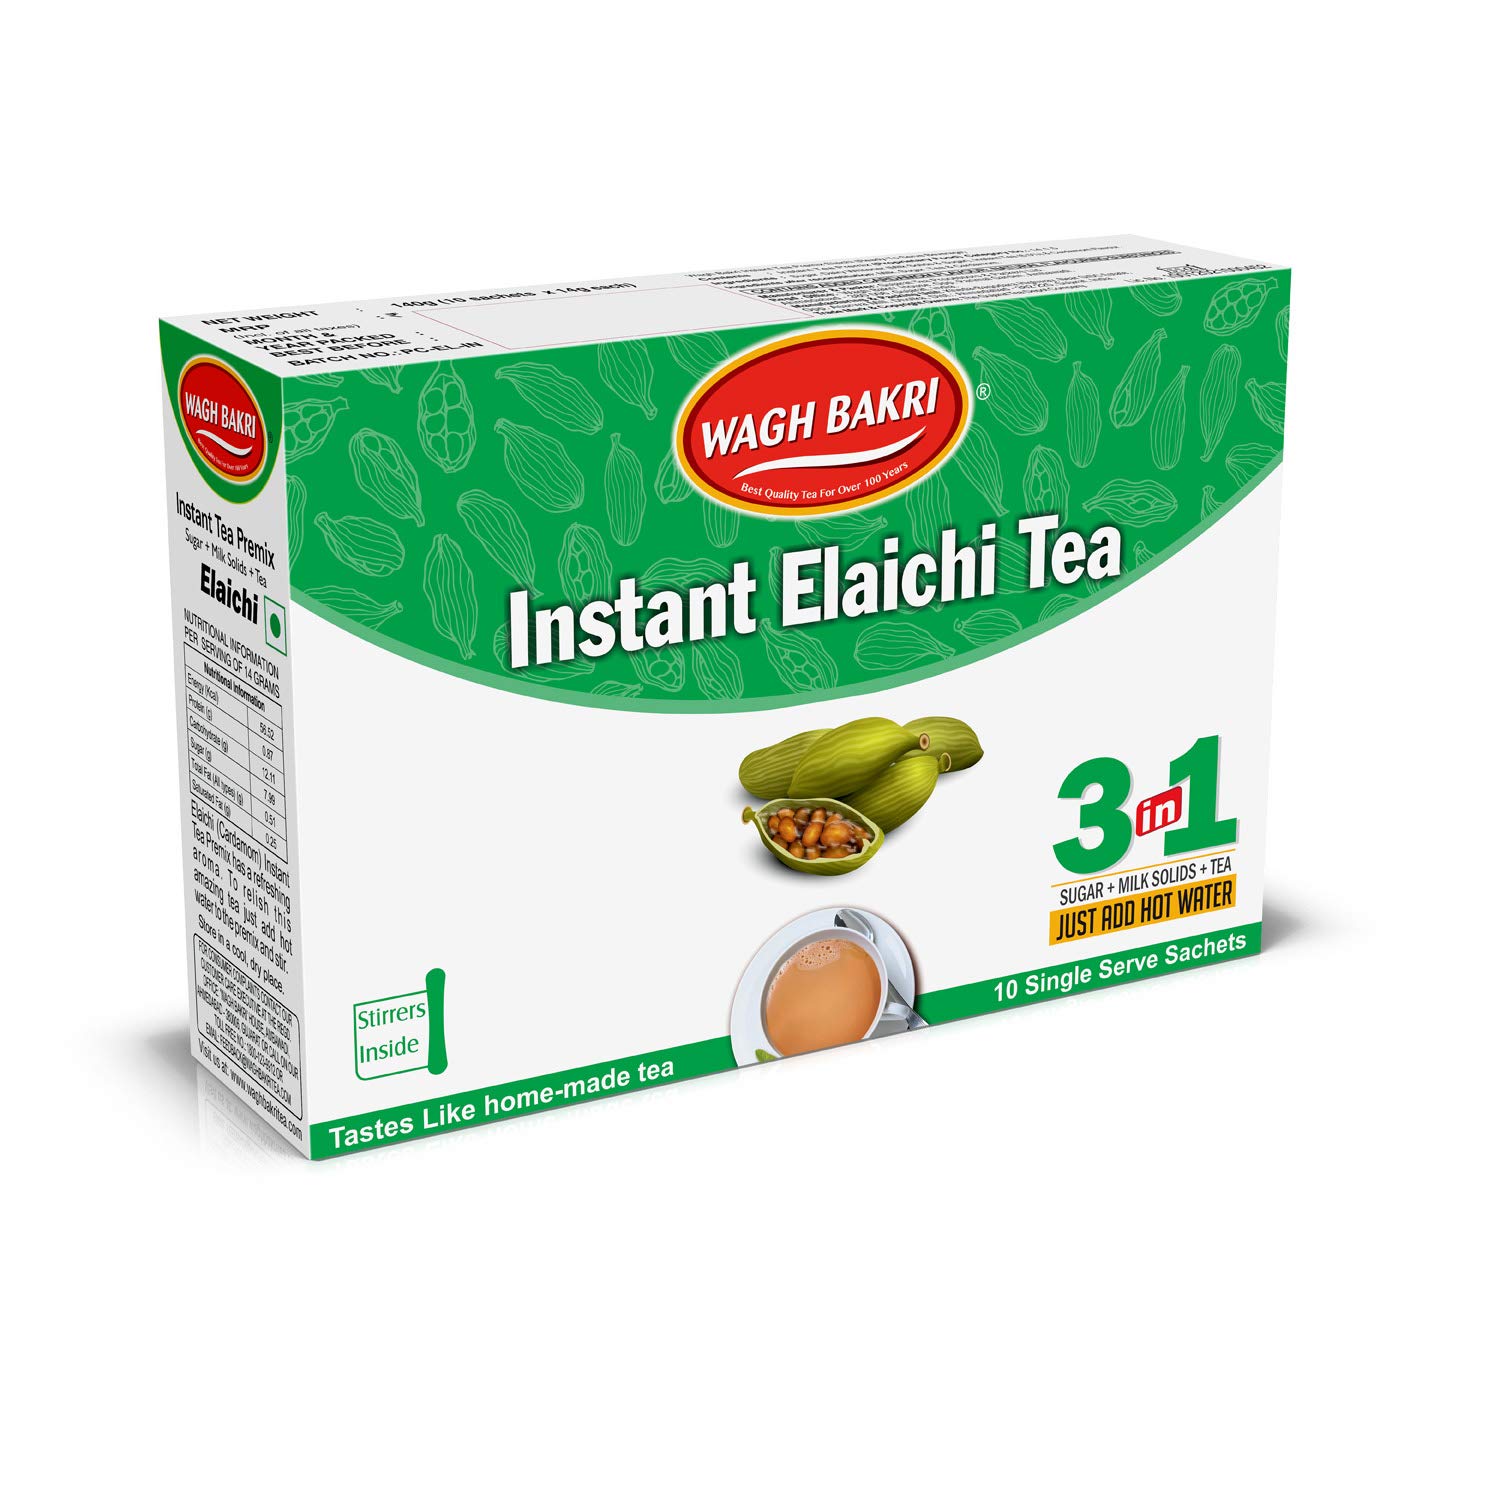 Wagh Bakri Instant Elaichi Tea Image